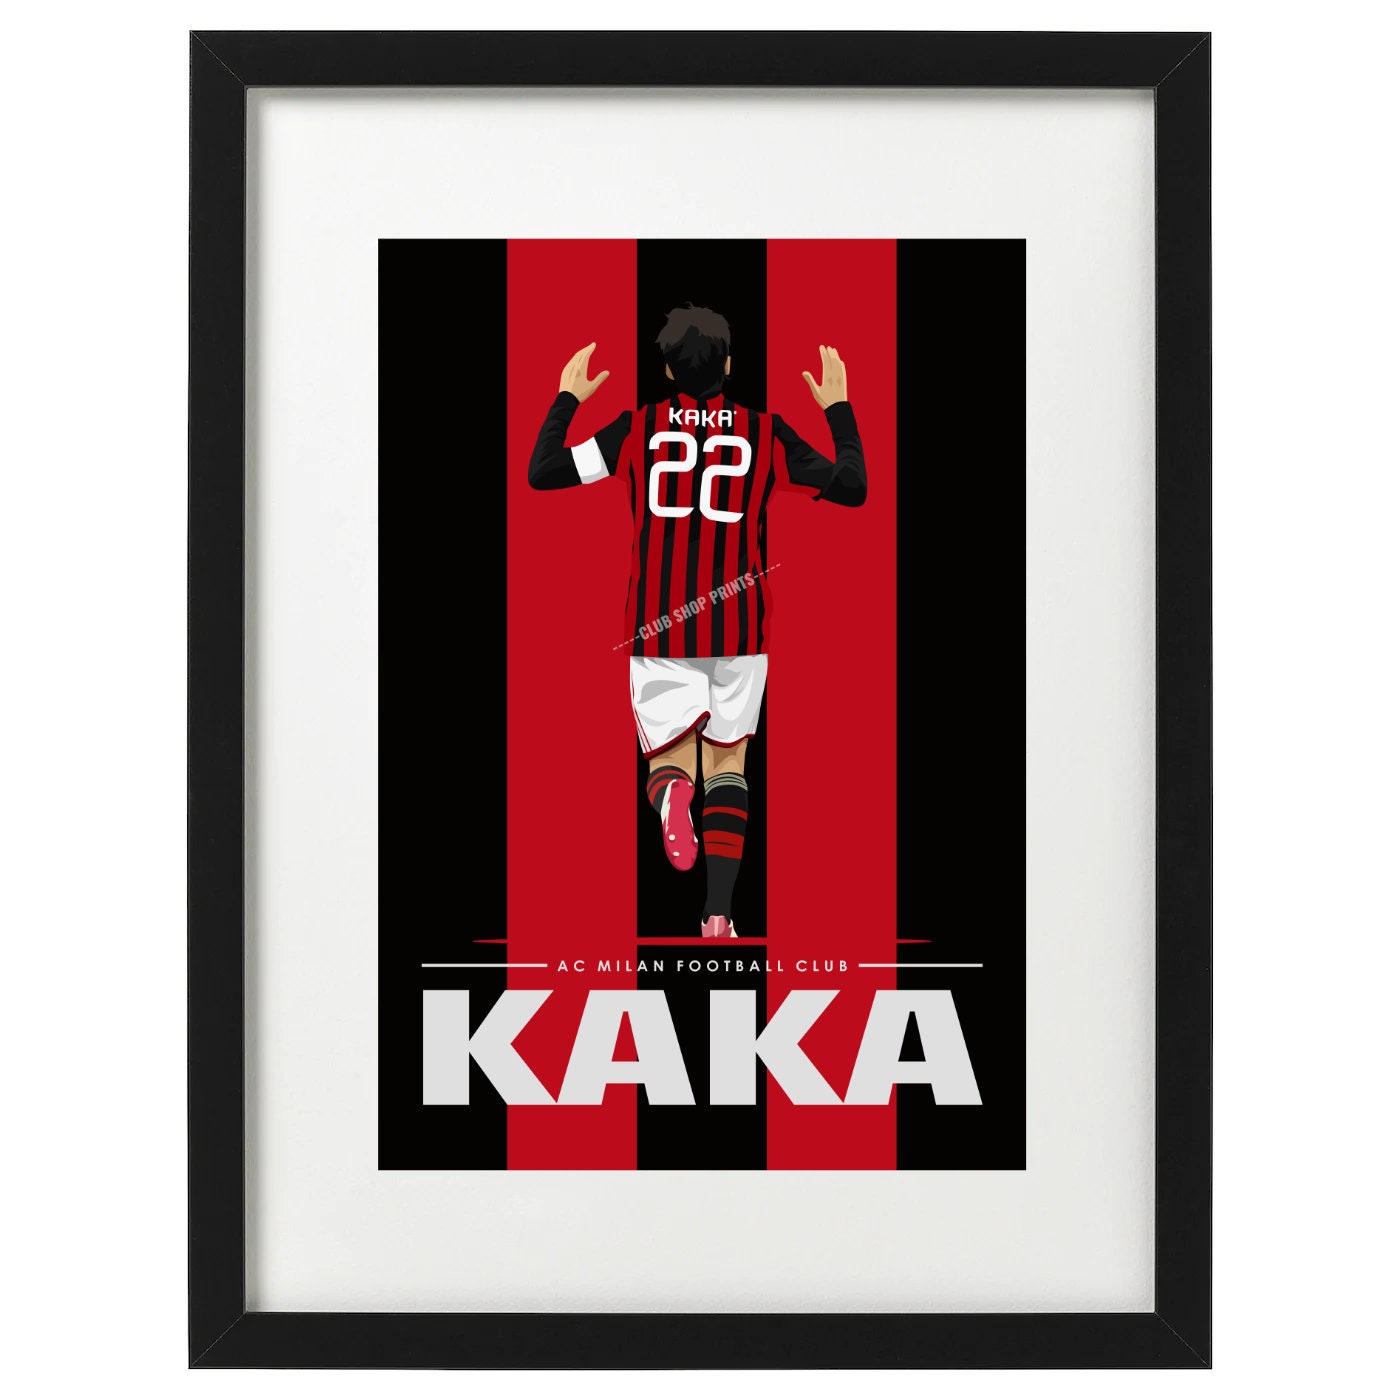 Score Draw AC Milan Home Kaka 22 Retro Jersey 1993-1994 (Gallery Style  Printing)